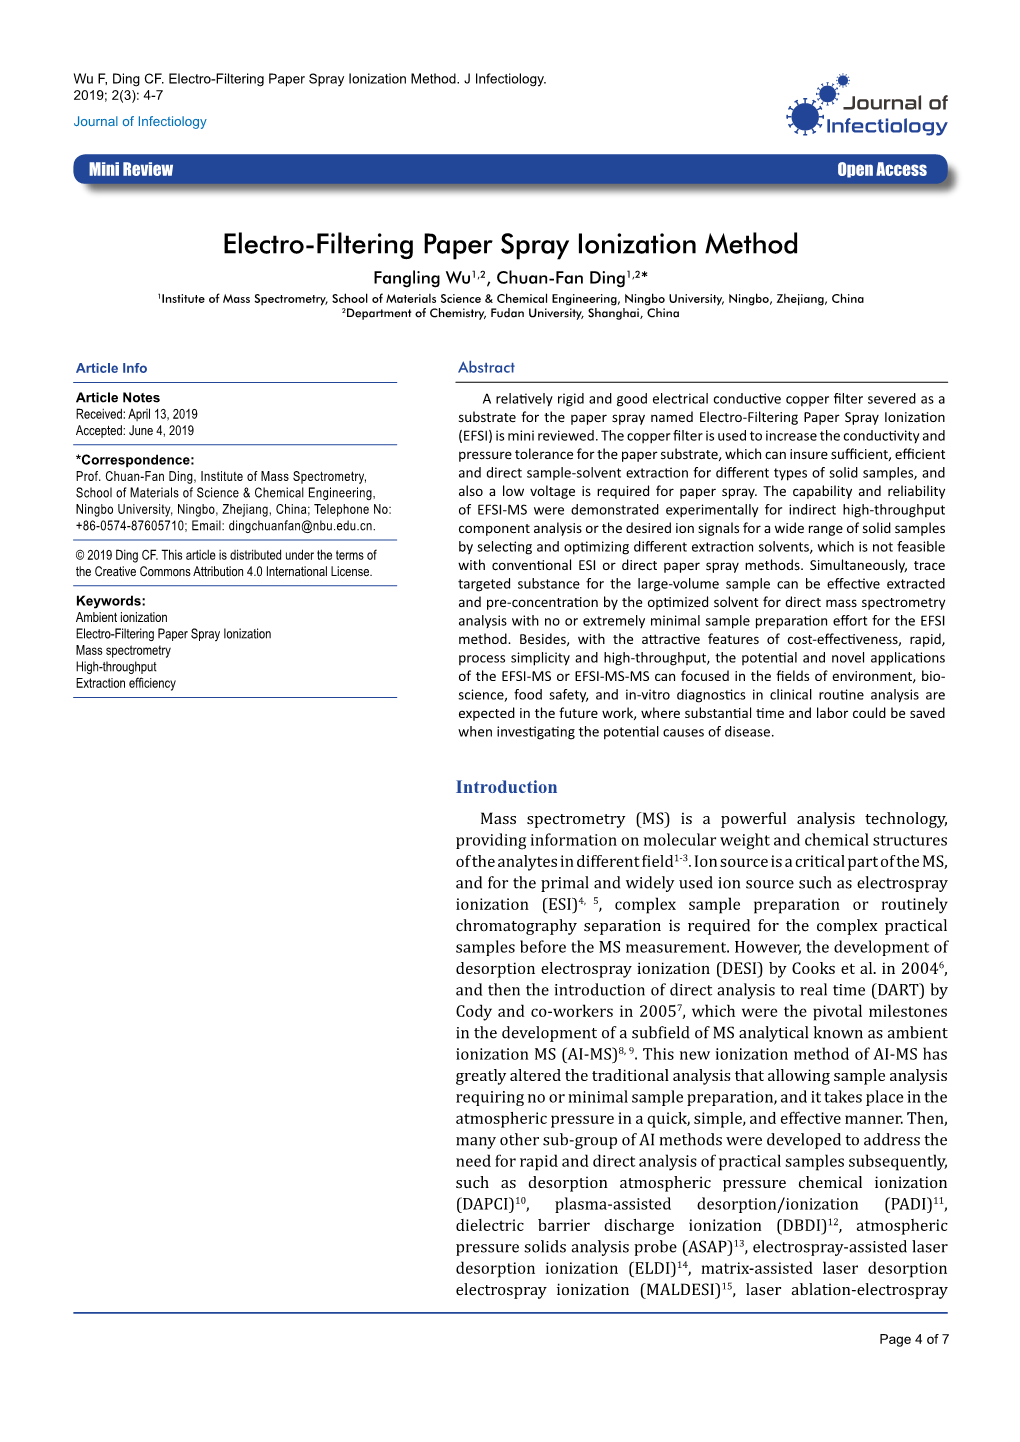 Electro-Filtering Paper Spray Ionization Method